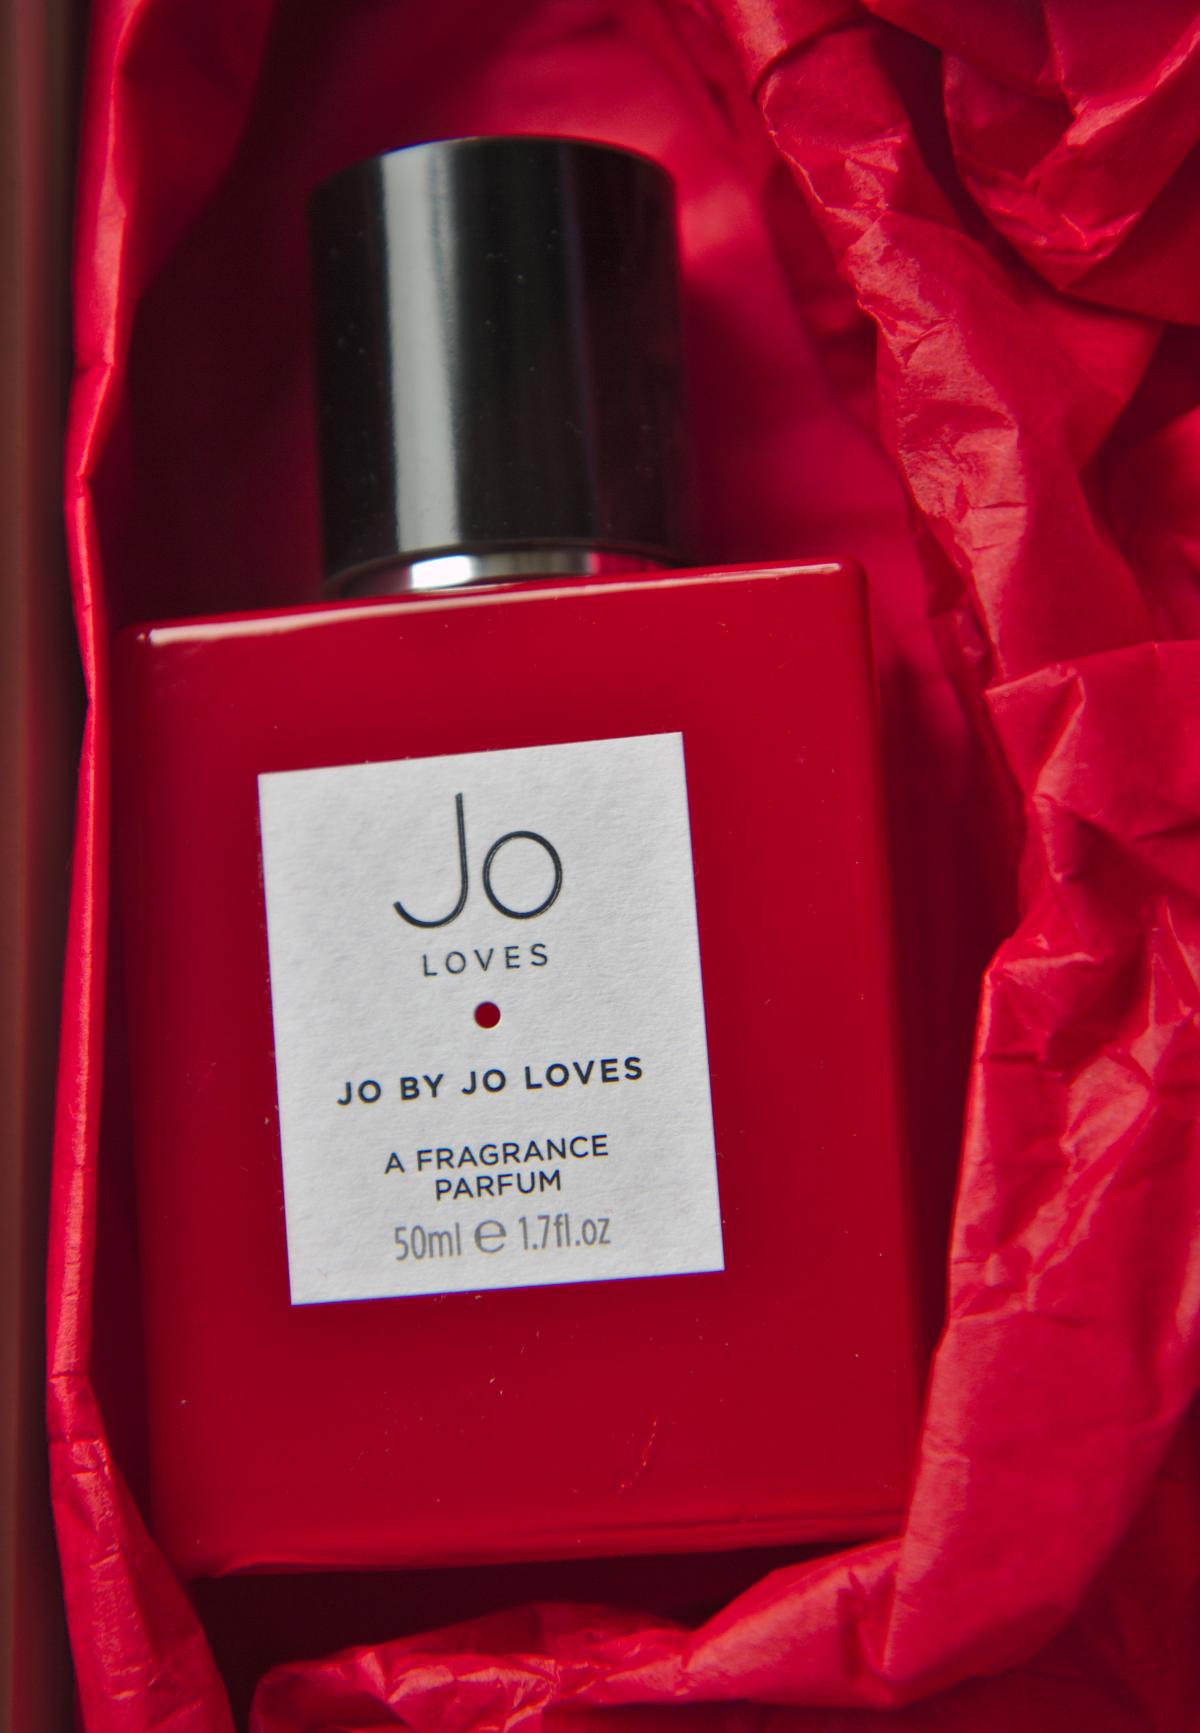 Jo by Jo Loves Jo Loves perfume - a new fragrance for women and men 2018